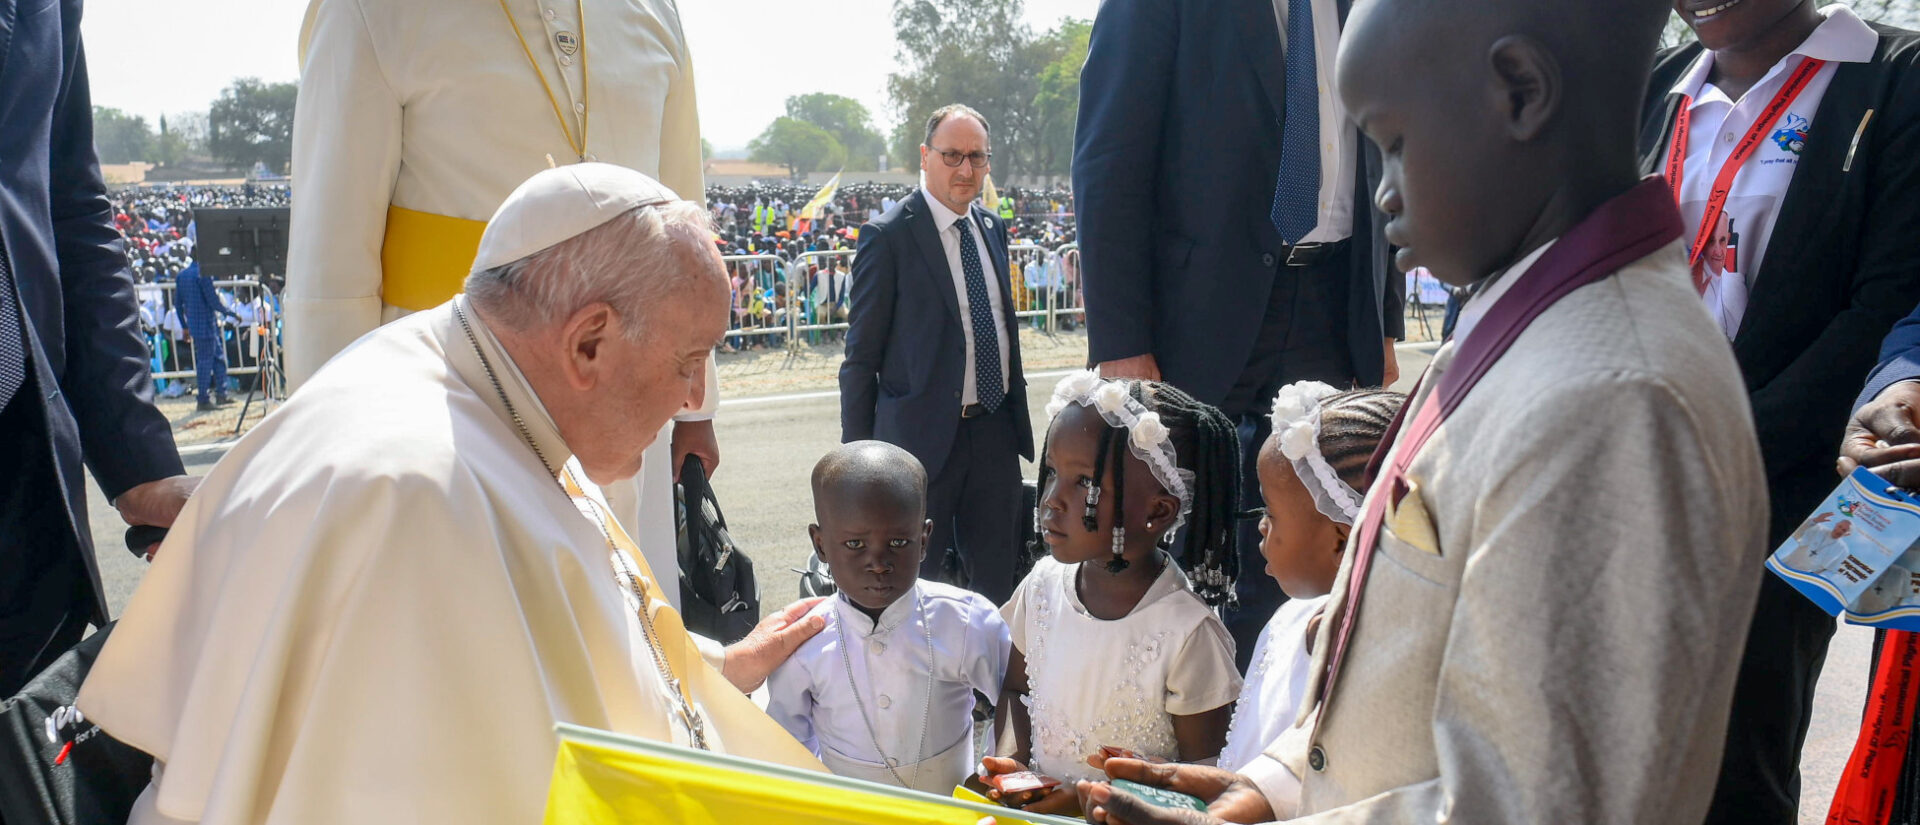 Papst Franziskus mit Kindern in Juba, Südsudan. | KNA